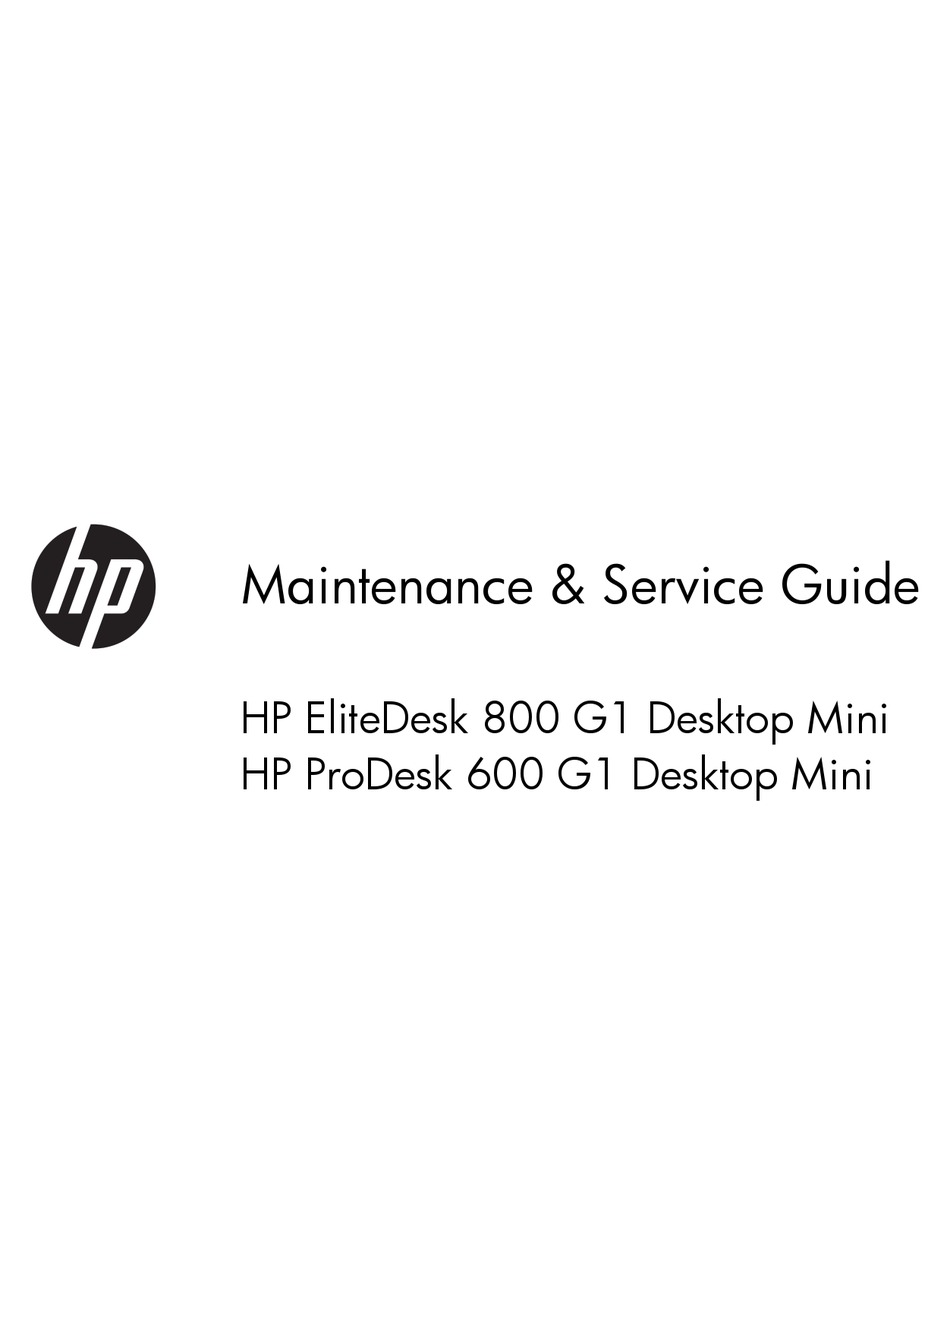 HP ELITEDESK 800 G1 MAINTENANCE  SERVICE MANUAL Pdf Download | ManualsLib